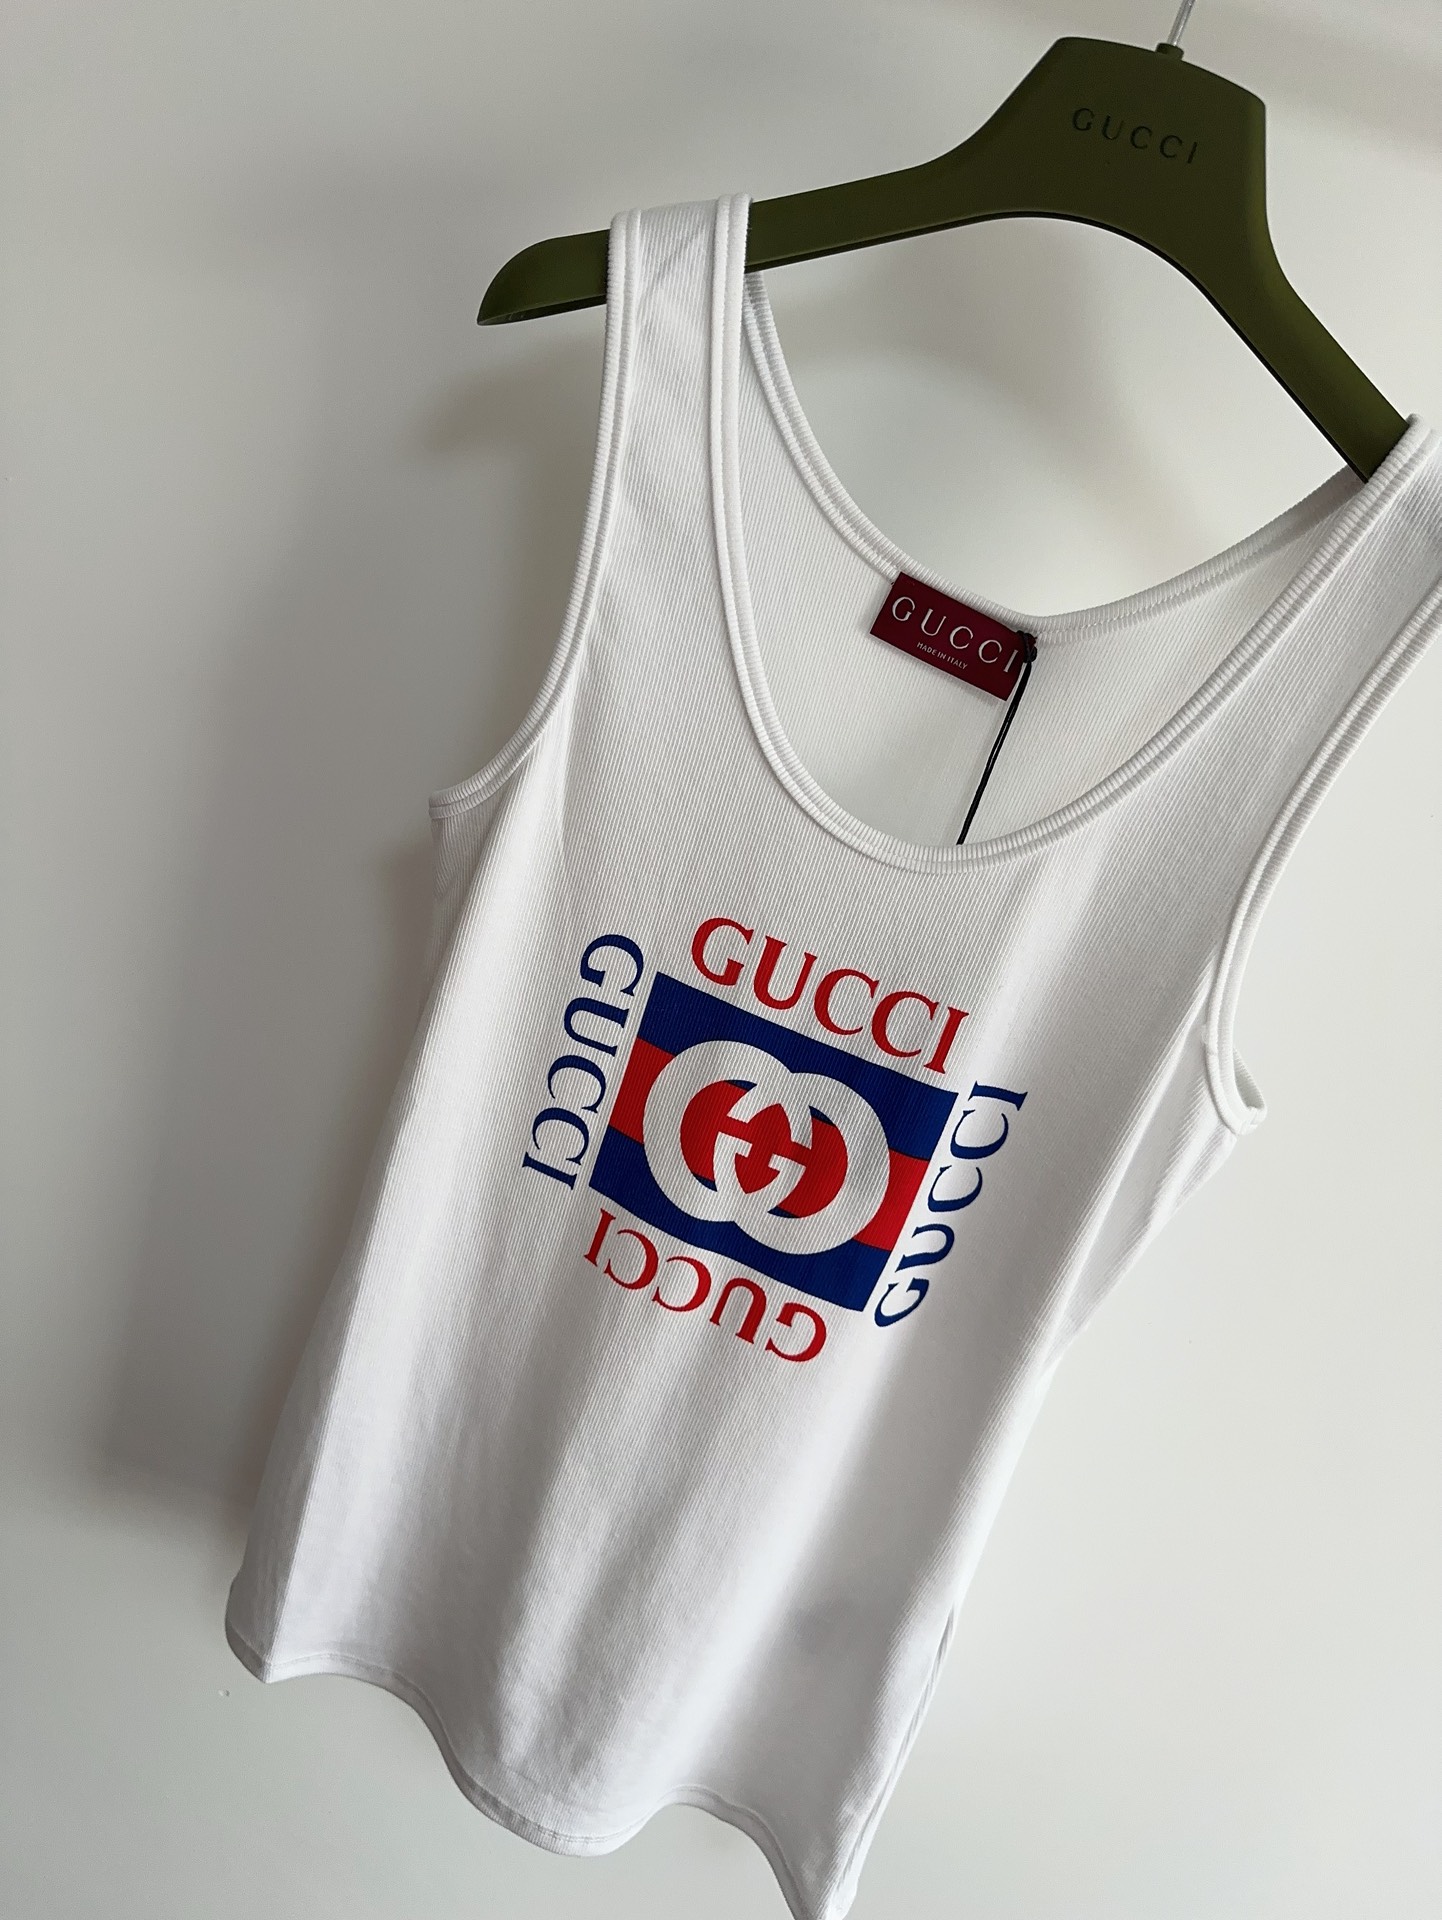 Gucc*24夏季新款印花字母针织背心出货胸前印花字母图案经典且高级感受夏日“趣味色彩搭配”真的想穿着它